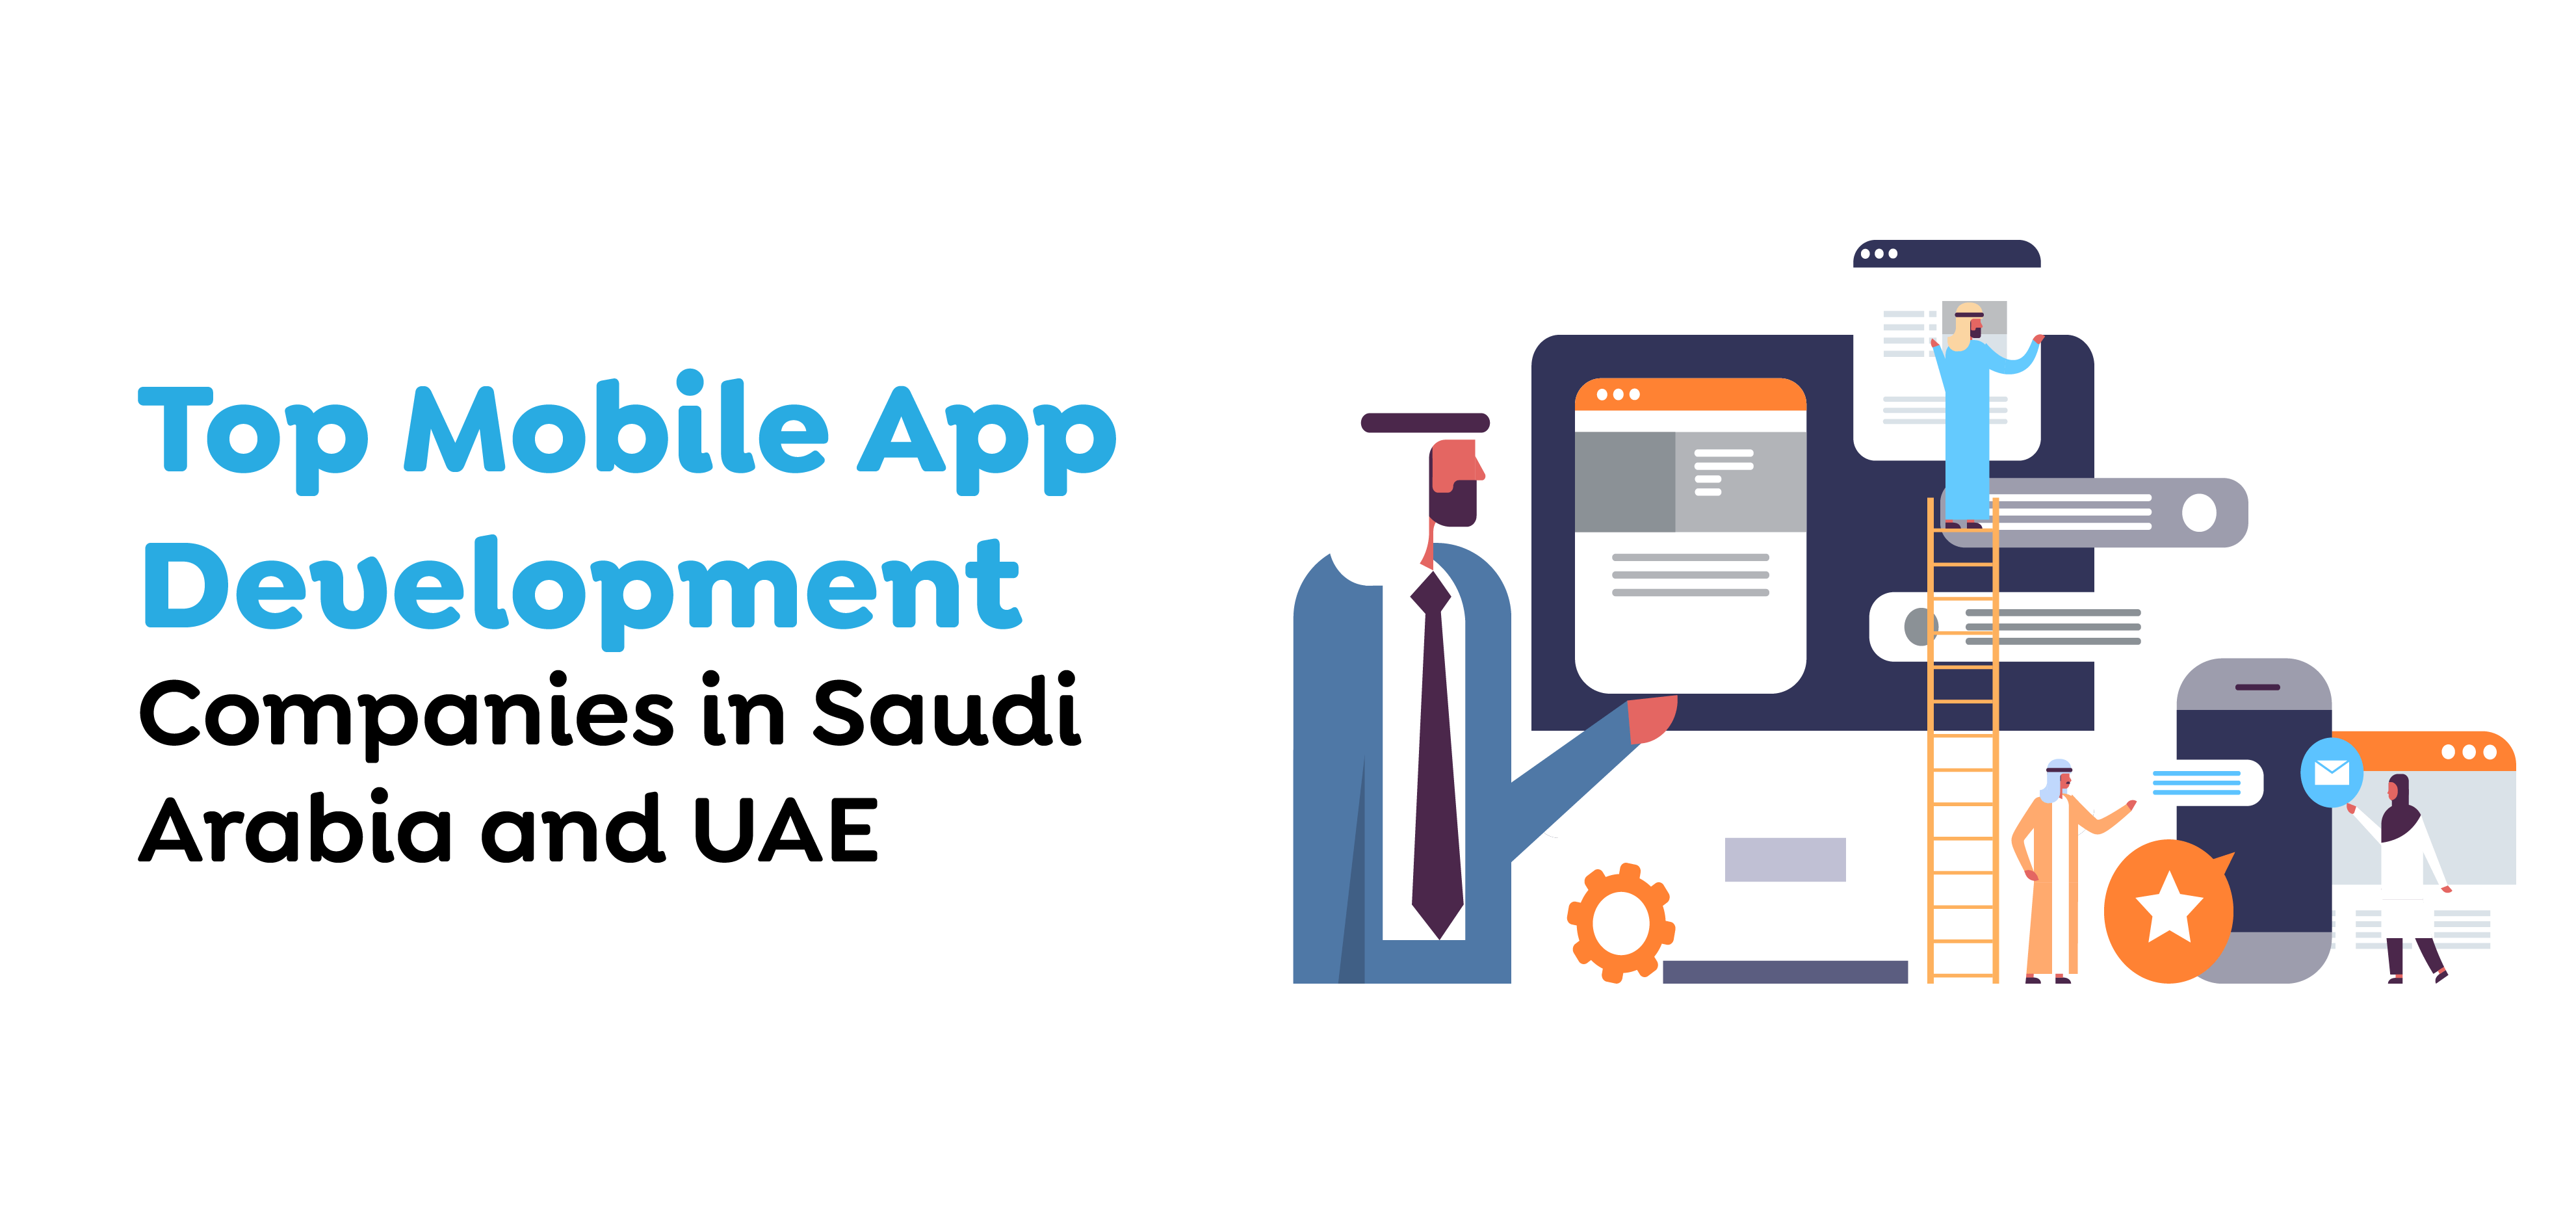 Top Mobile App Development Companies in Saudi Arabia